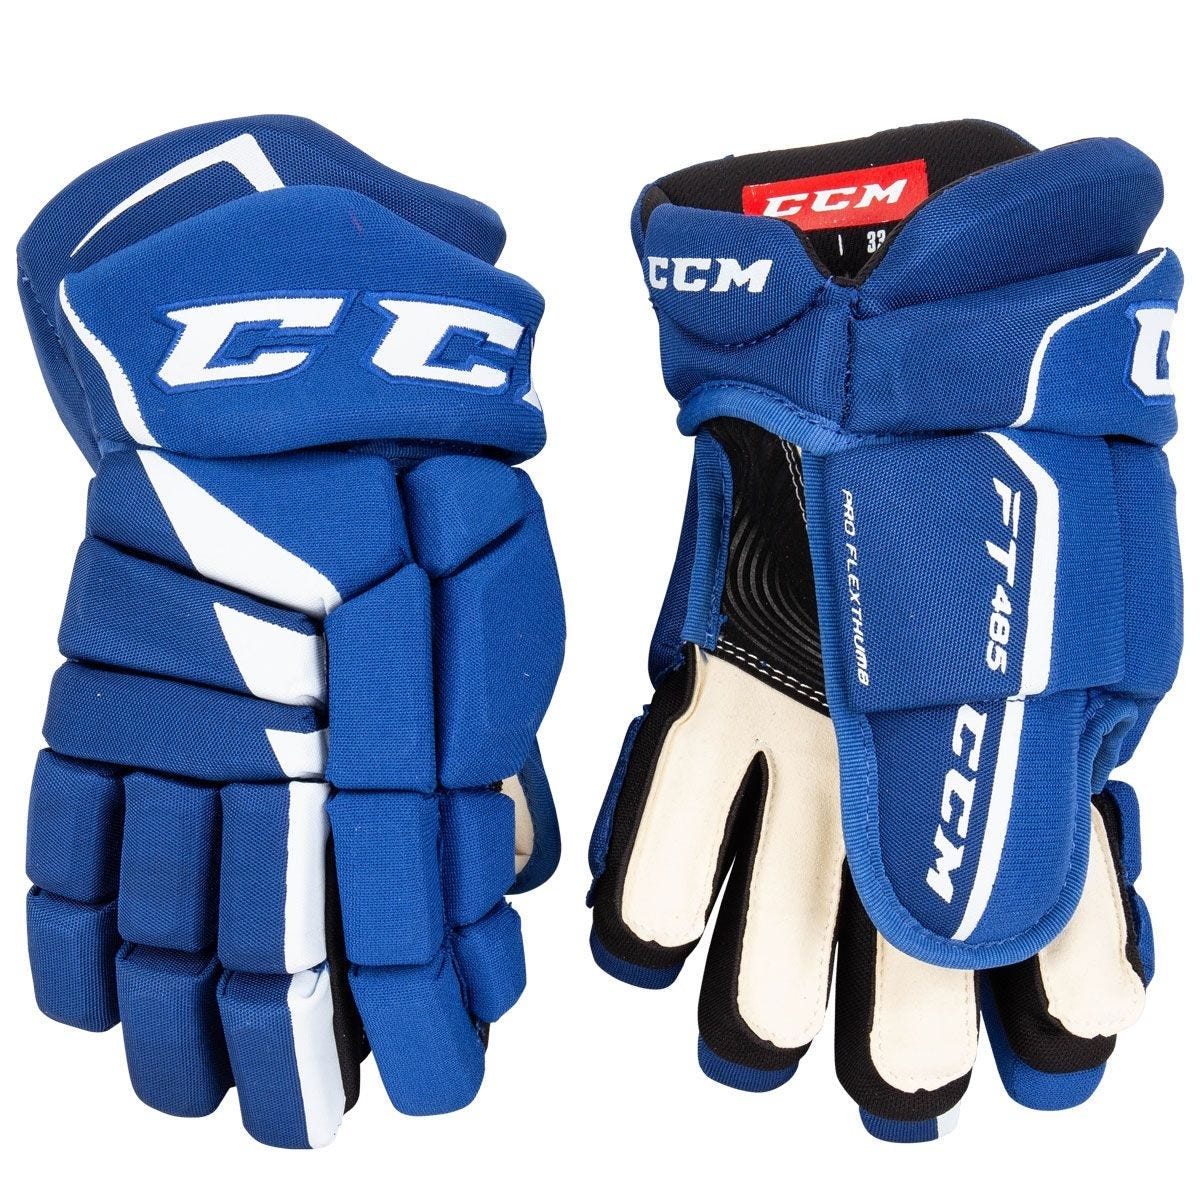 CCM Jetspeed FT485 Junior Ice Hockey Gloves